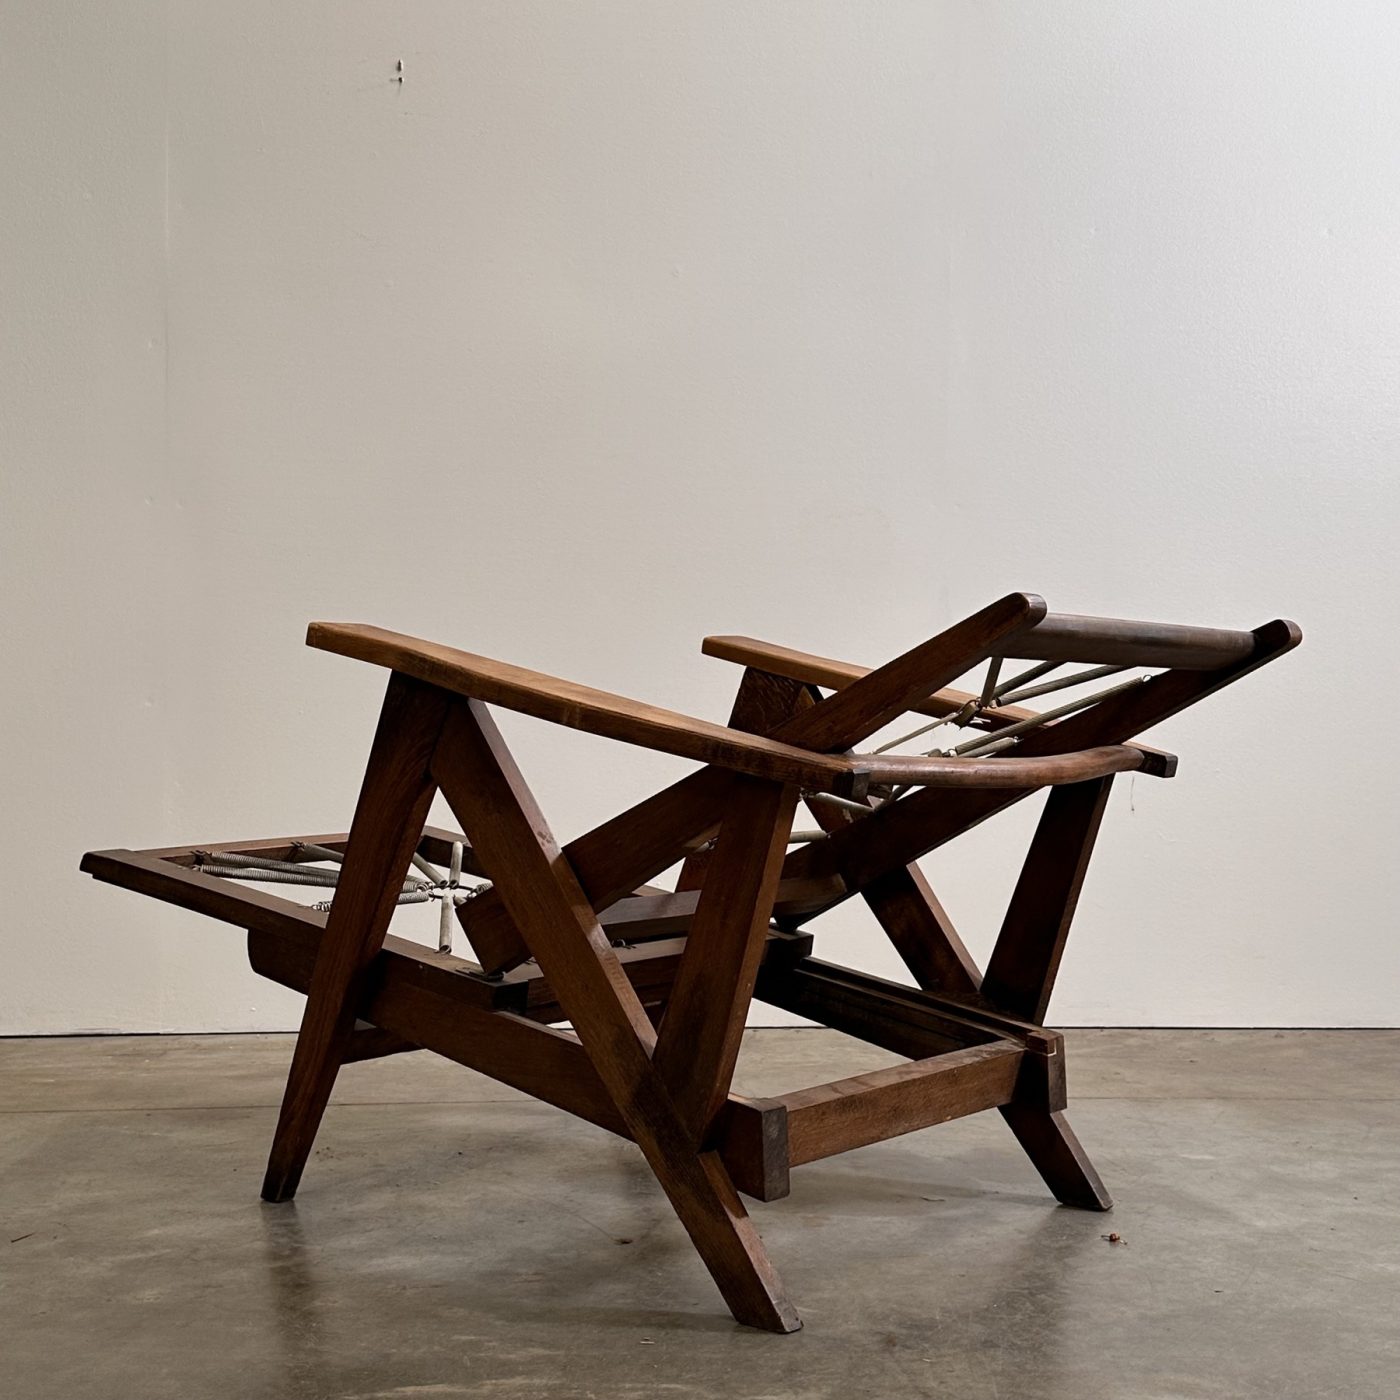 objet-vagabond-reconstruction-armchairs0004